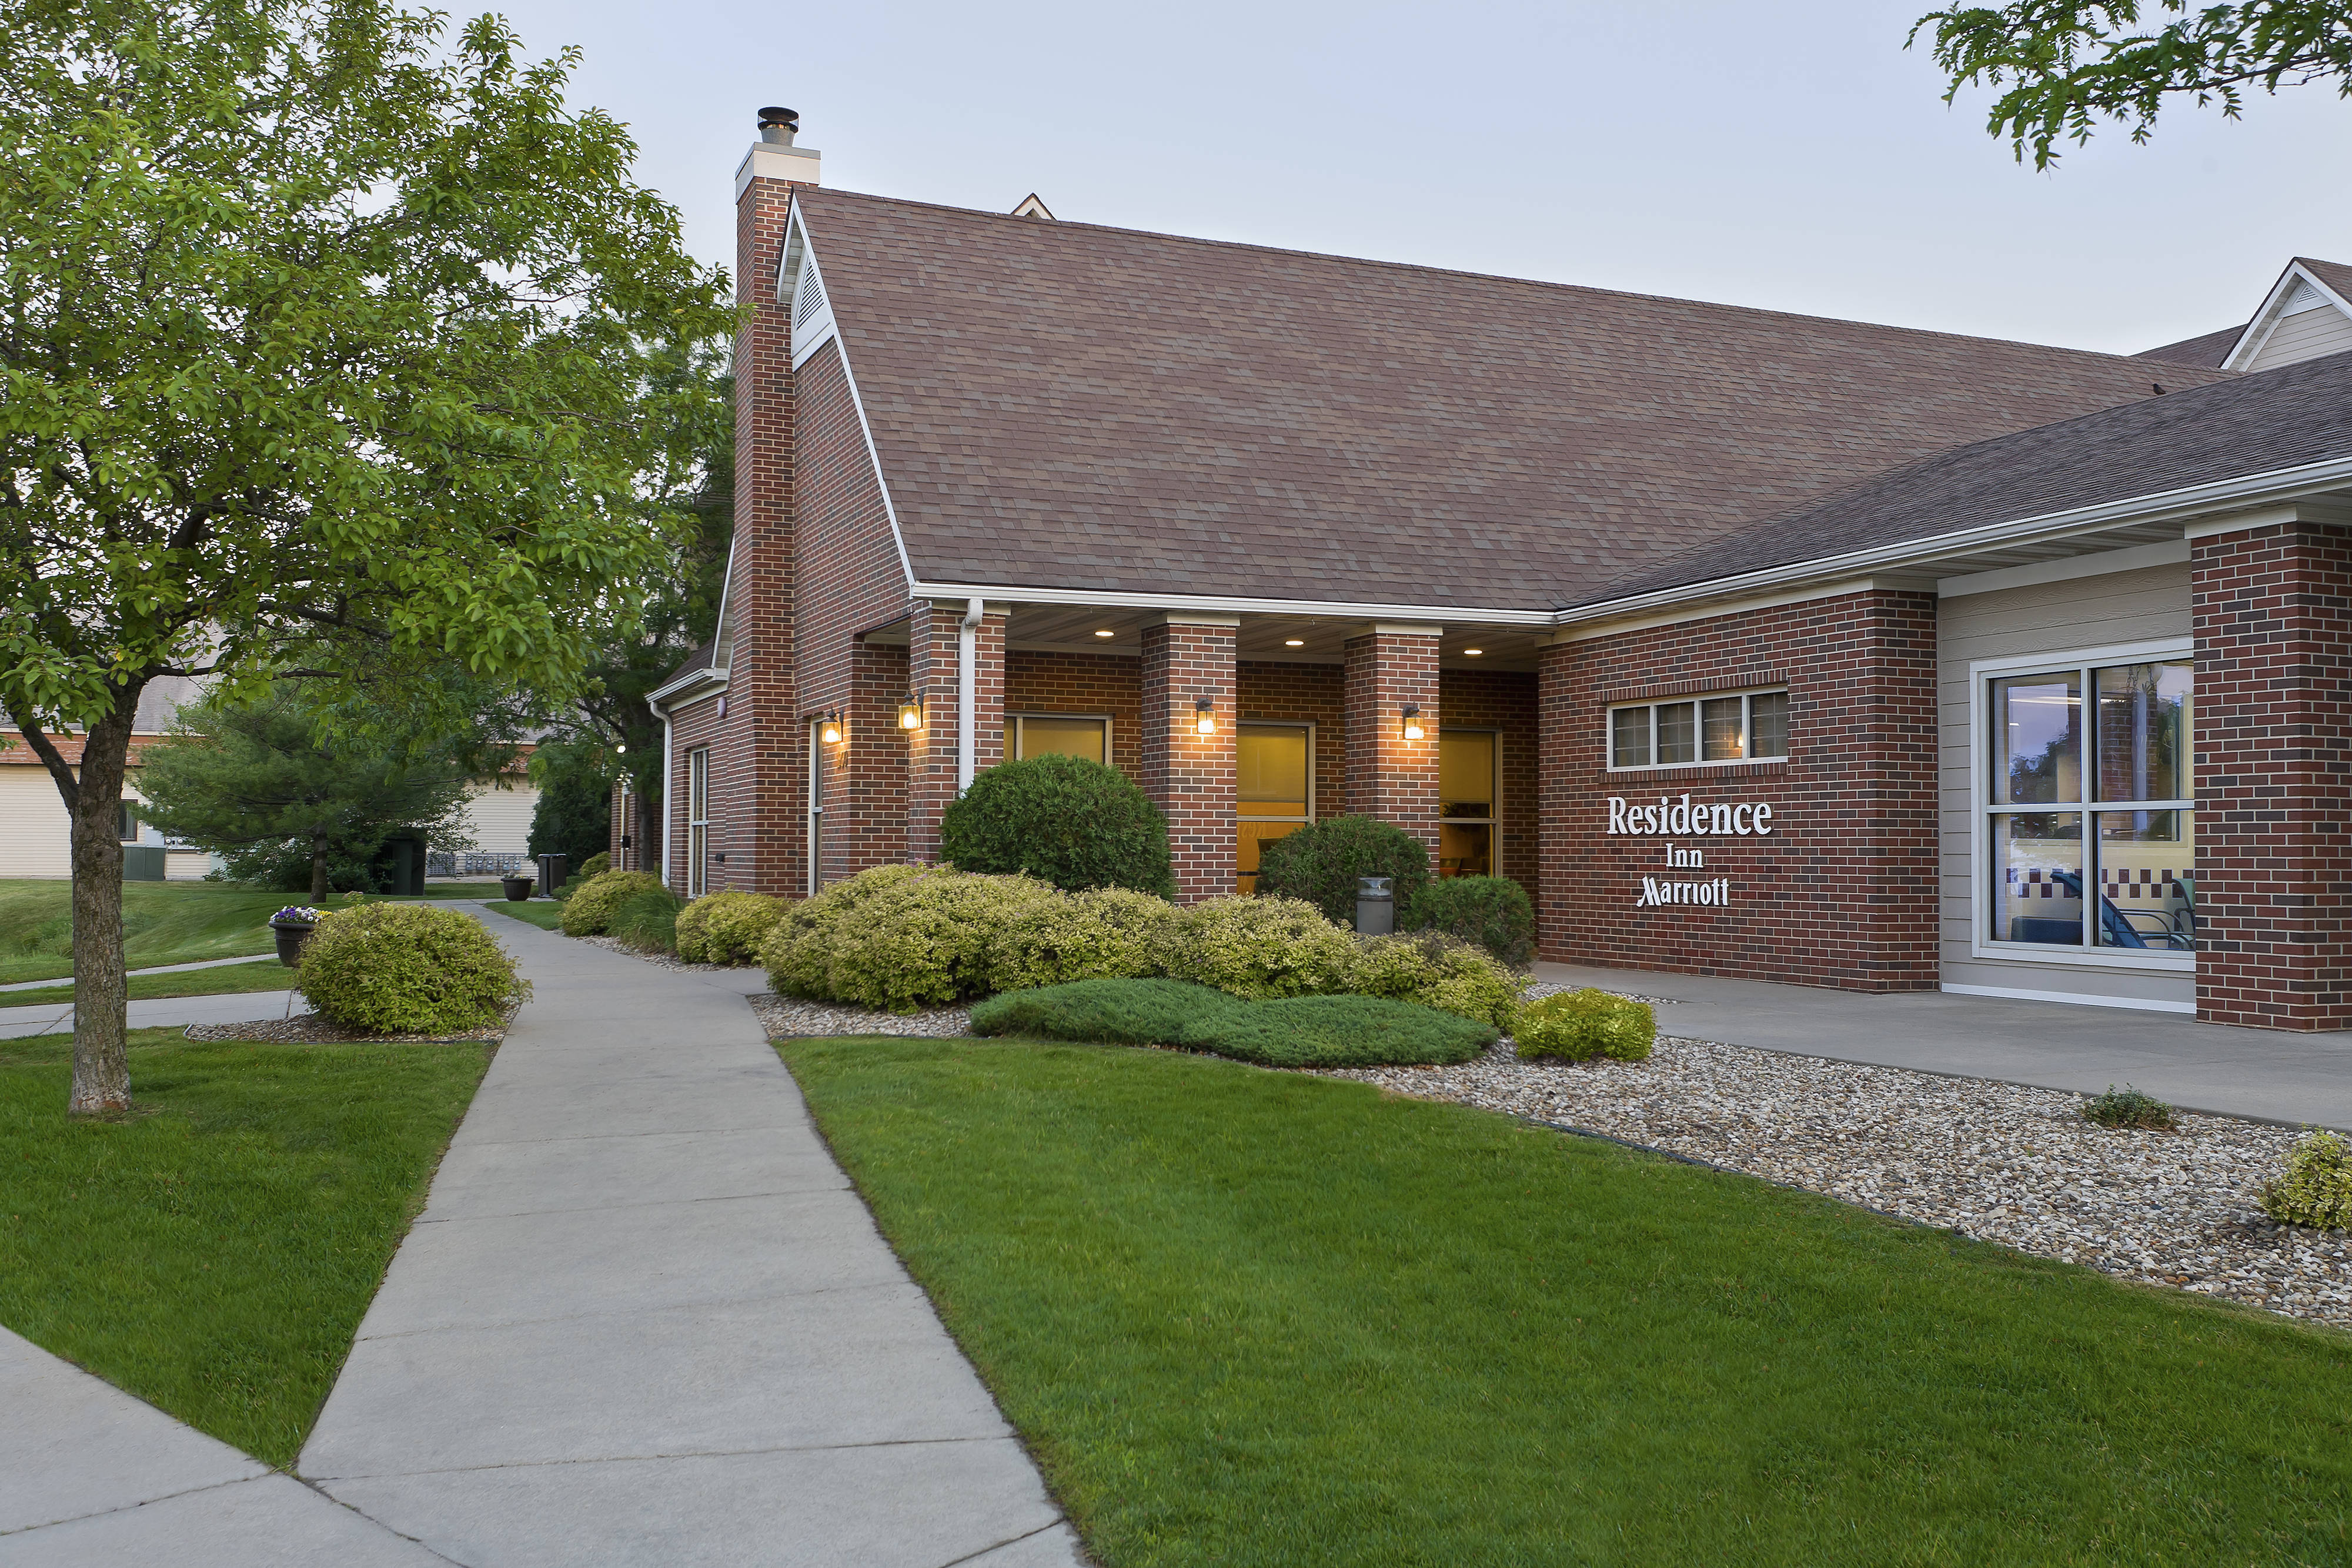 Photo of Residence Inn by Marriott Cedar Rapids, Cedar Rapids, IA